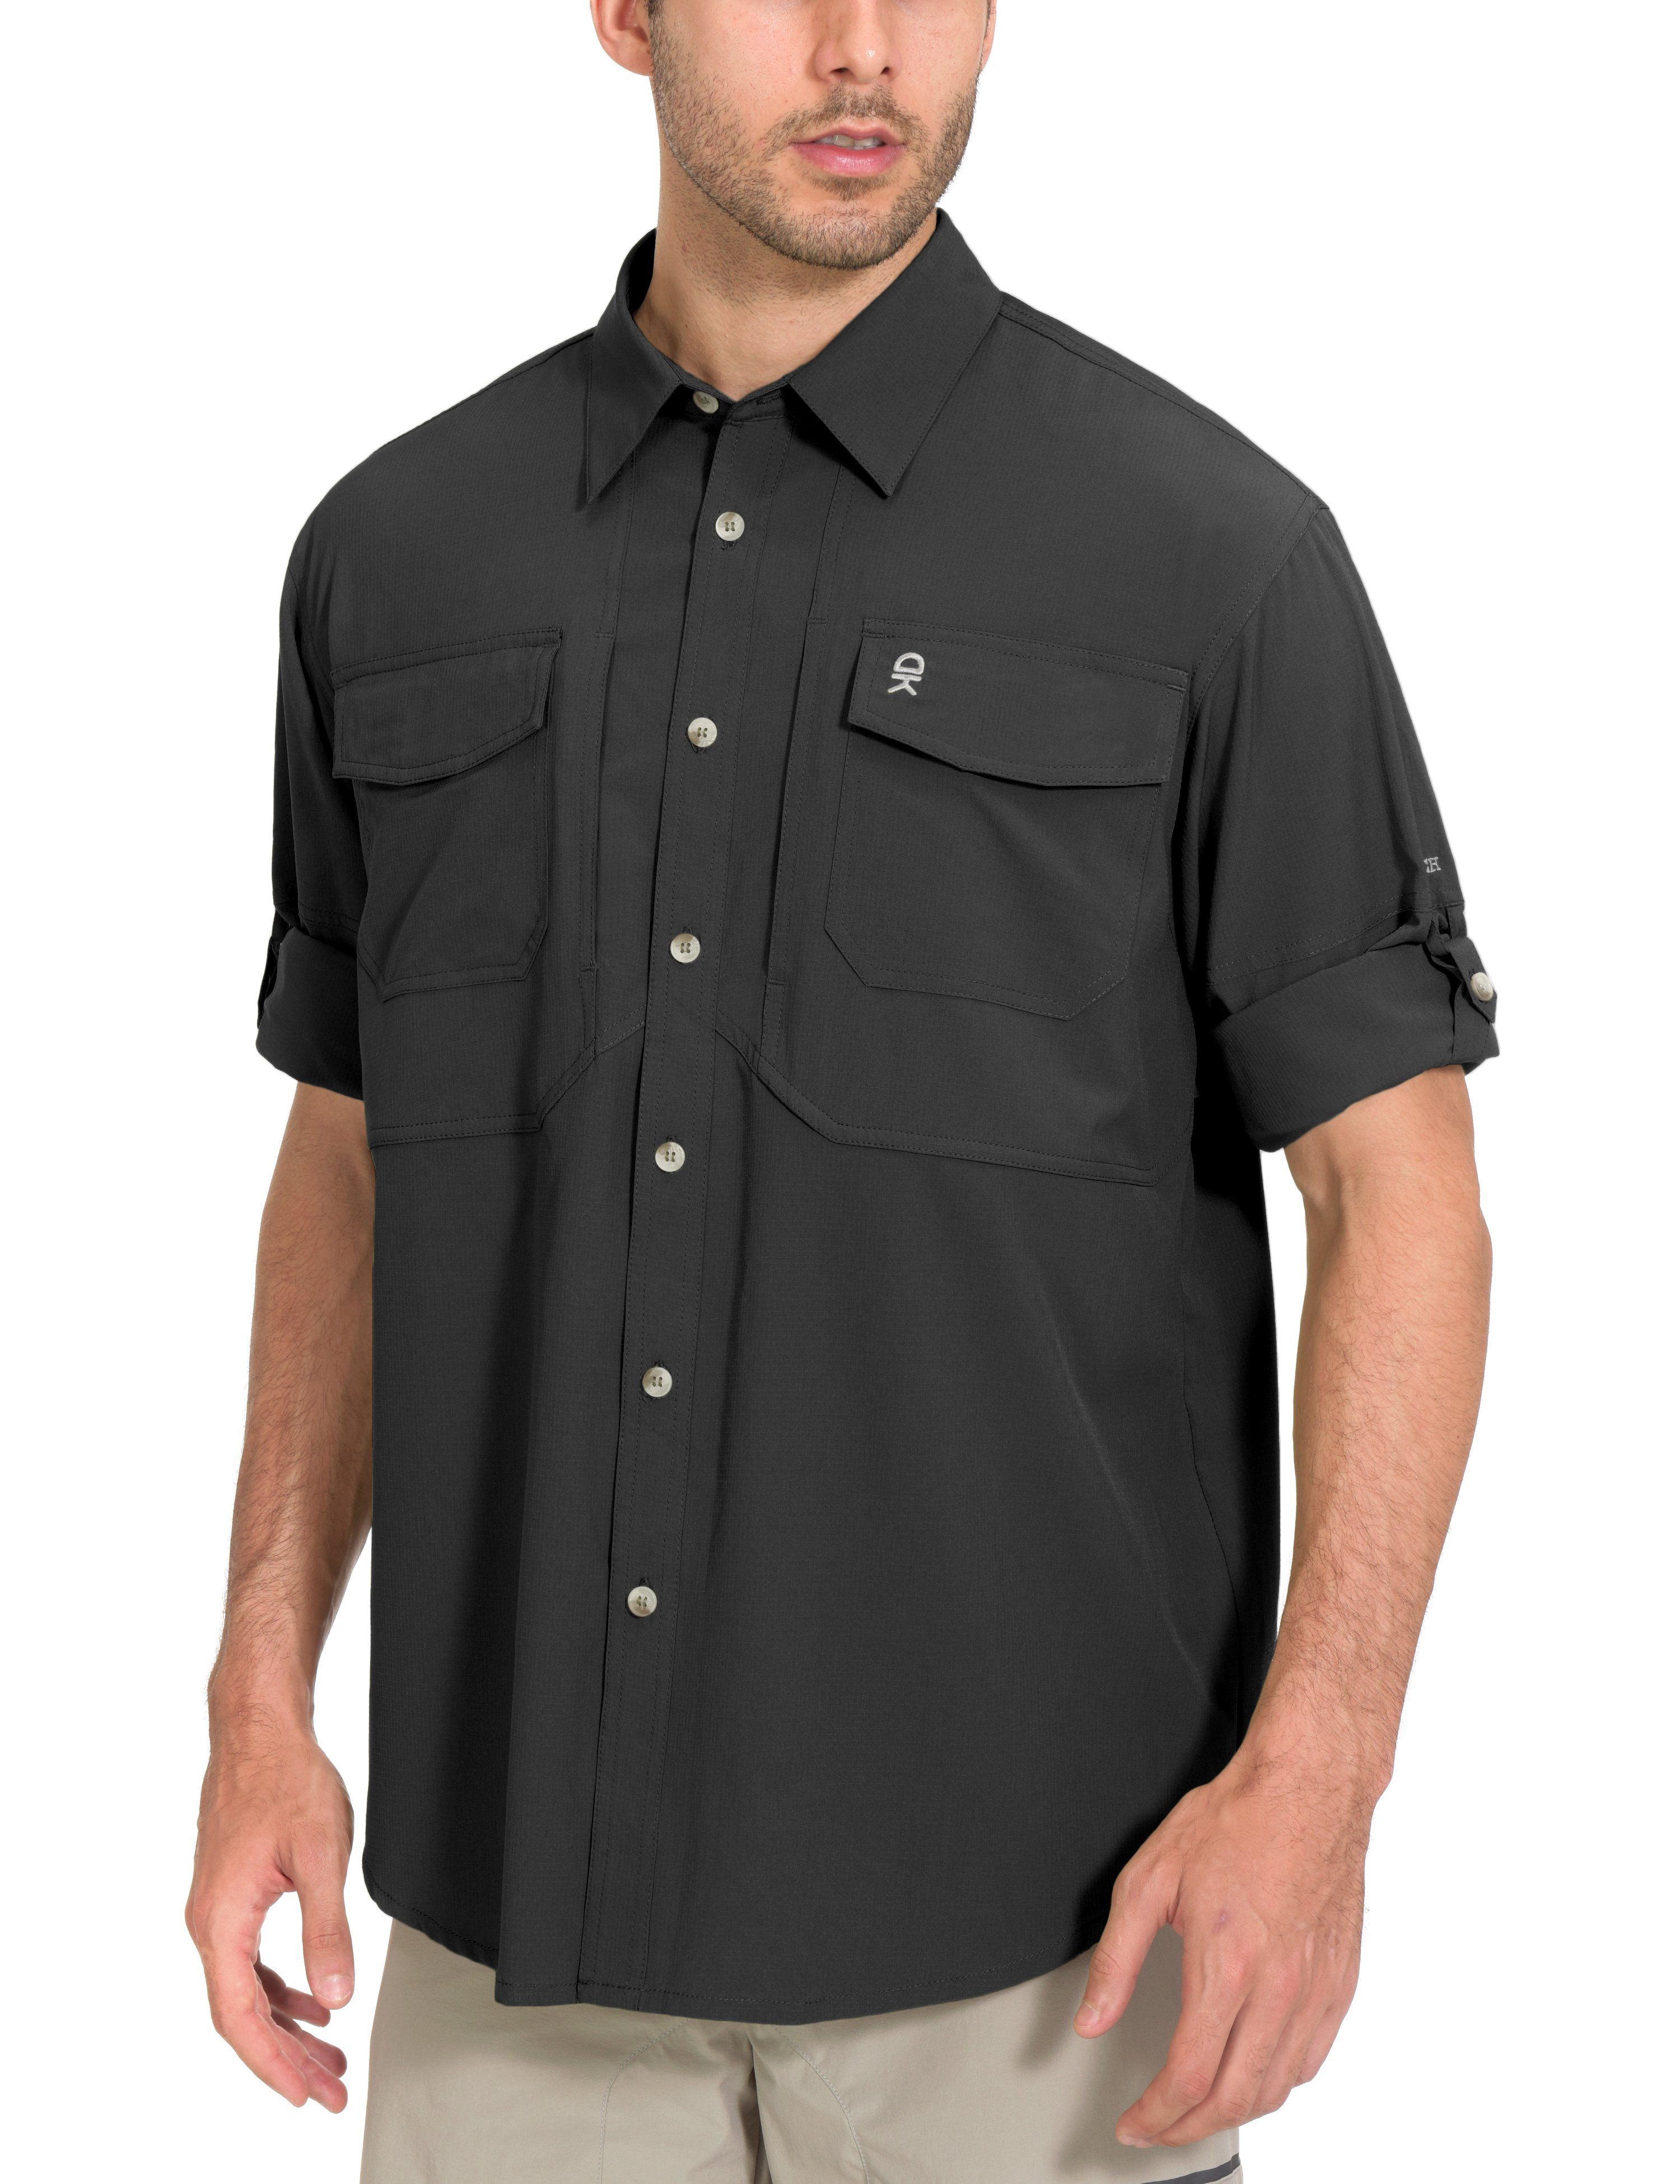 Men's UV Protection UPF 50 Long Sleeve Shirts – Little Donkey Andy